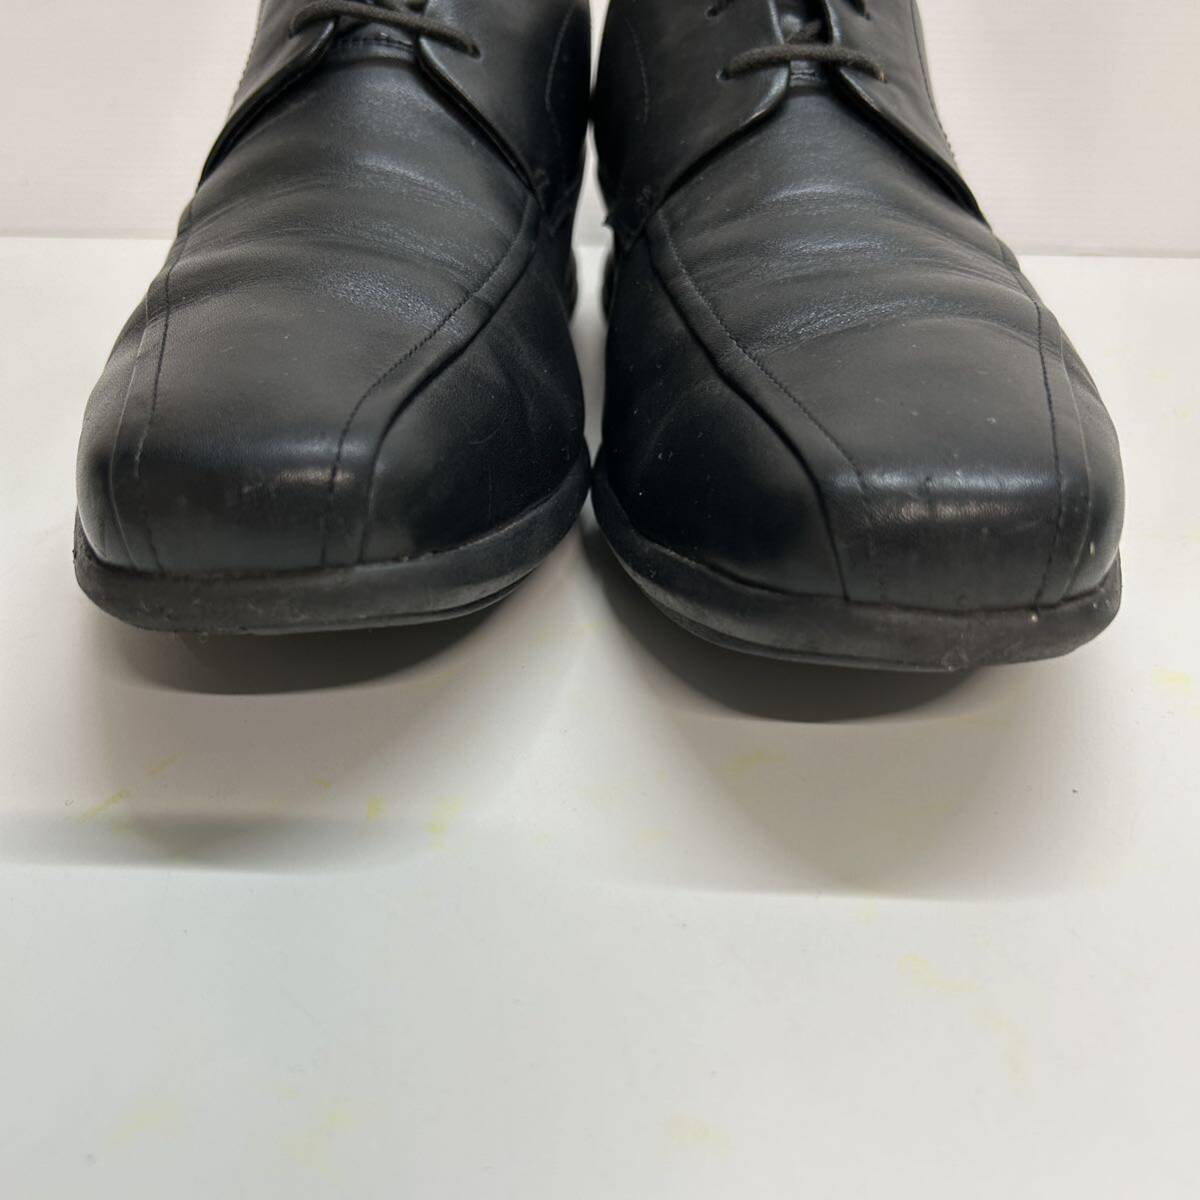 C650 Clarks Clarks men's walking shoes business shoes 8G approximately 26cm black leather 